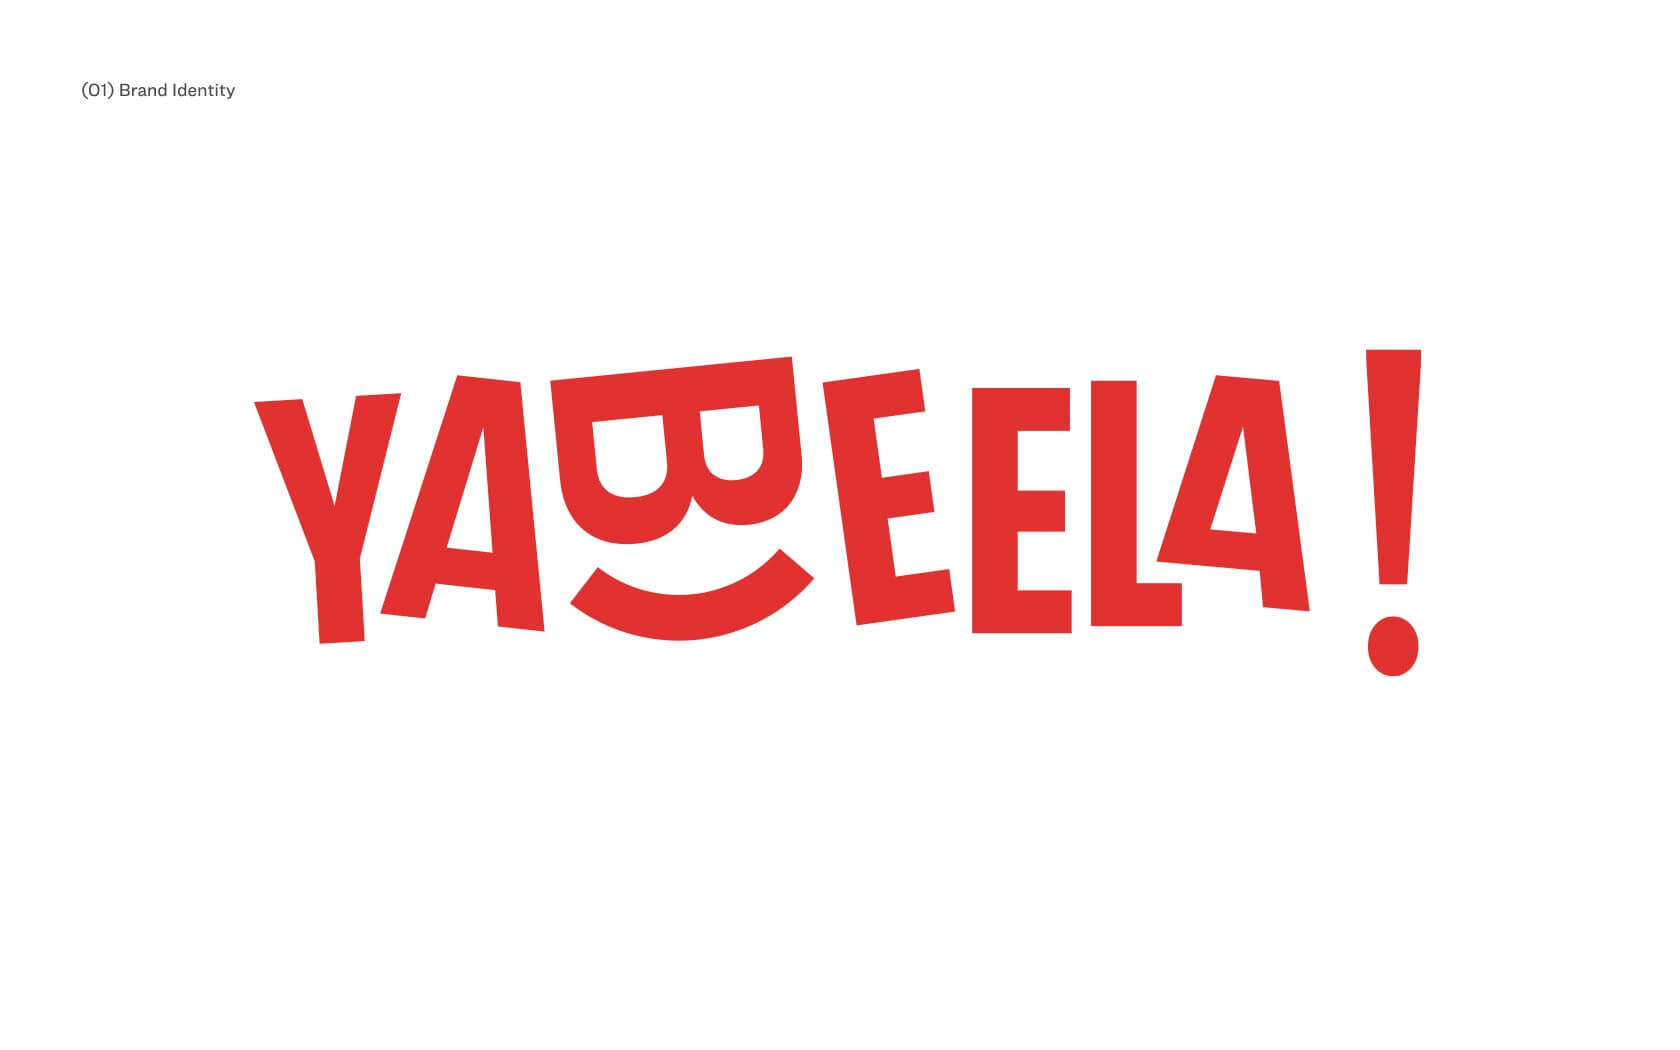 Yabeela! Logo in Red